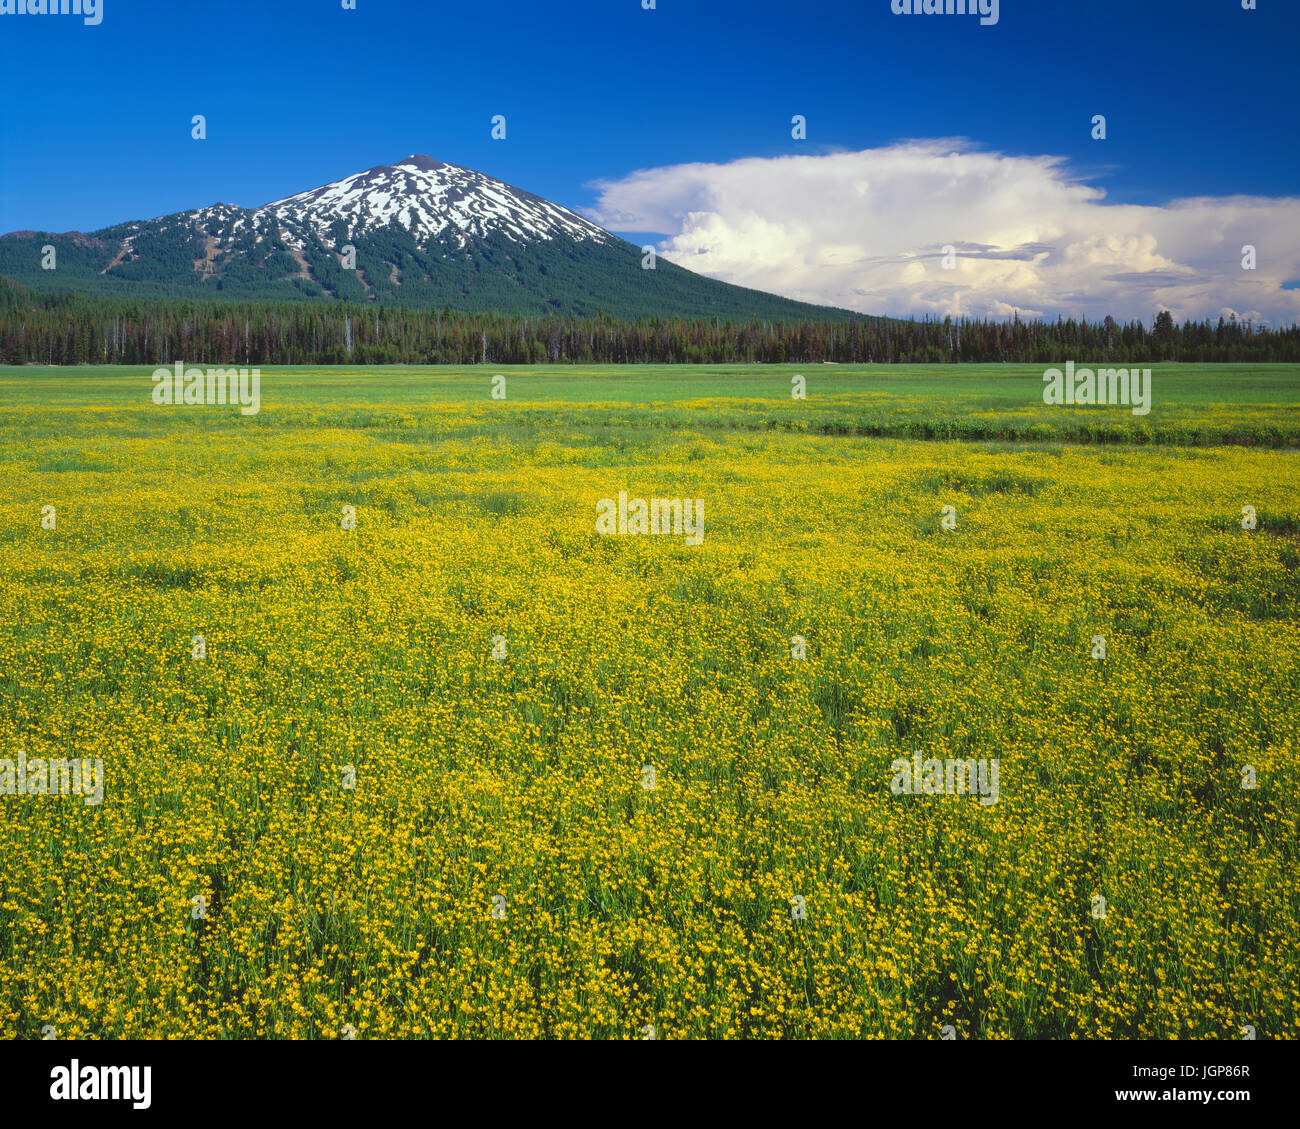 USA, Oregon, Deschutes National Forest, el Mount Bachelor supera amplia de bloom subalpinos buttercup en prado húmedo cerca de chispas Lago. Foto de stock